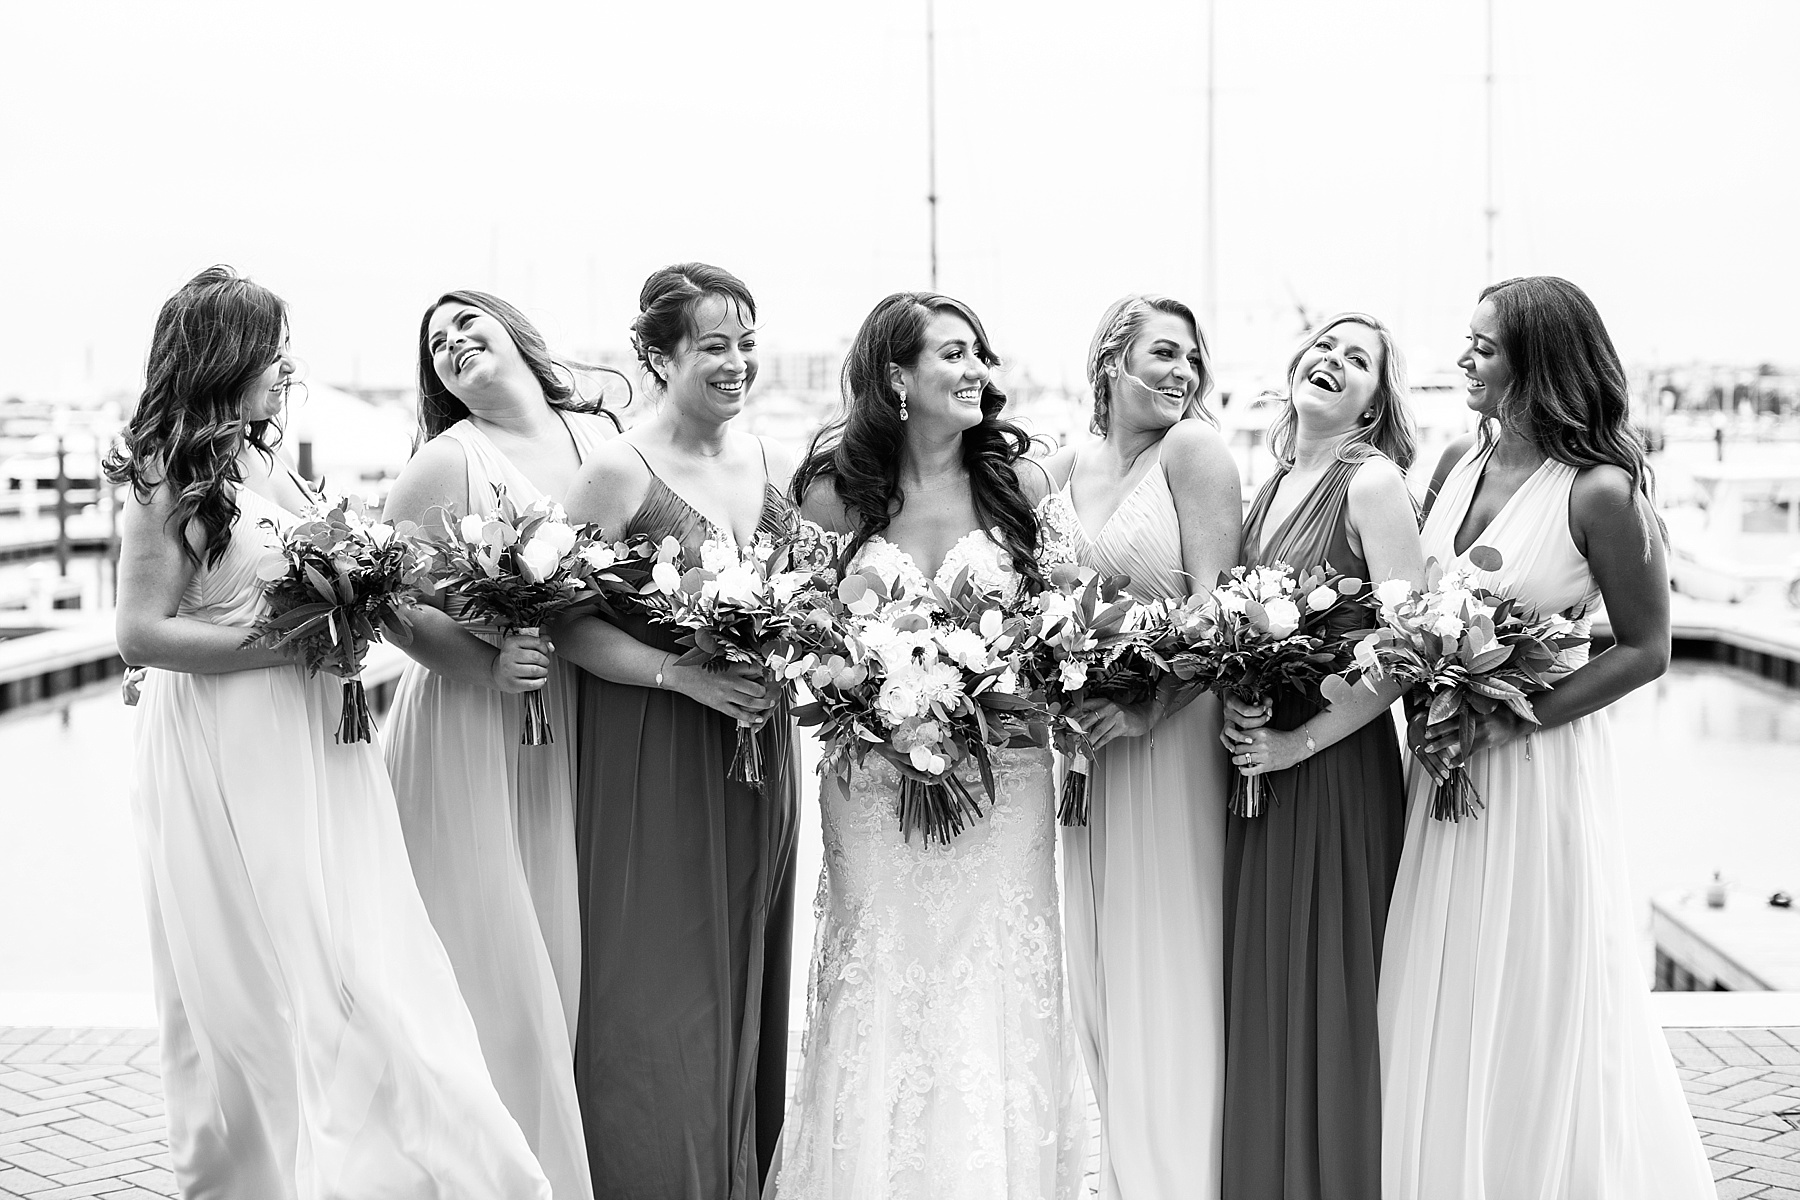 Alexandra Mandato Photography photographs bridesmaid photos in Maryland